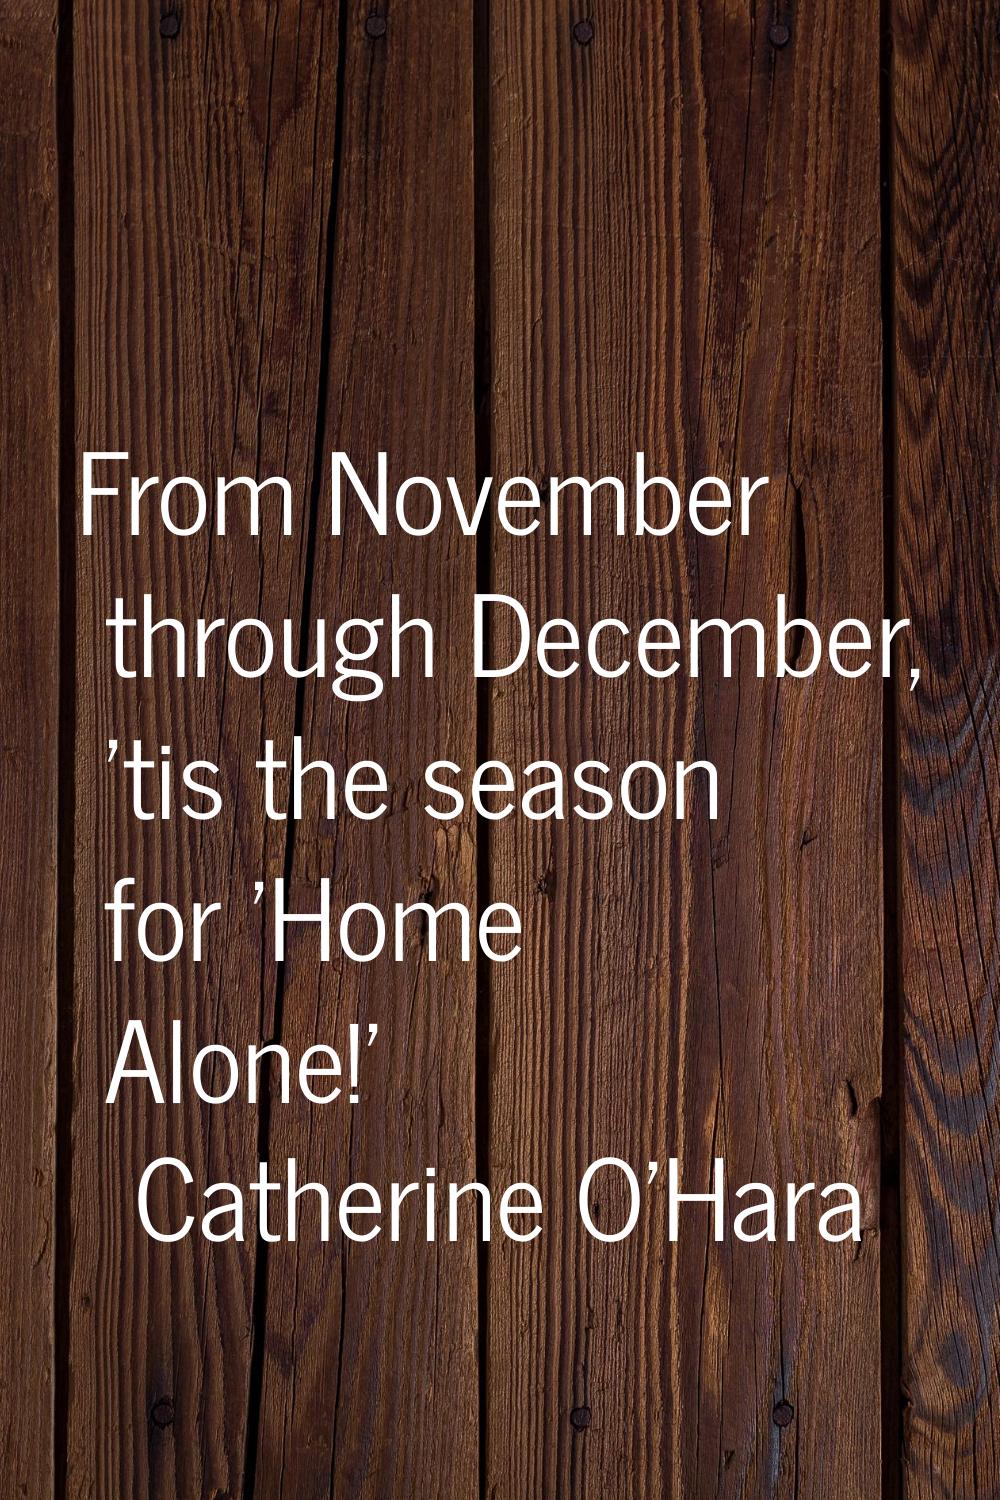 From November through December, 'tis the season for 'Home Alone!'